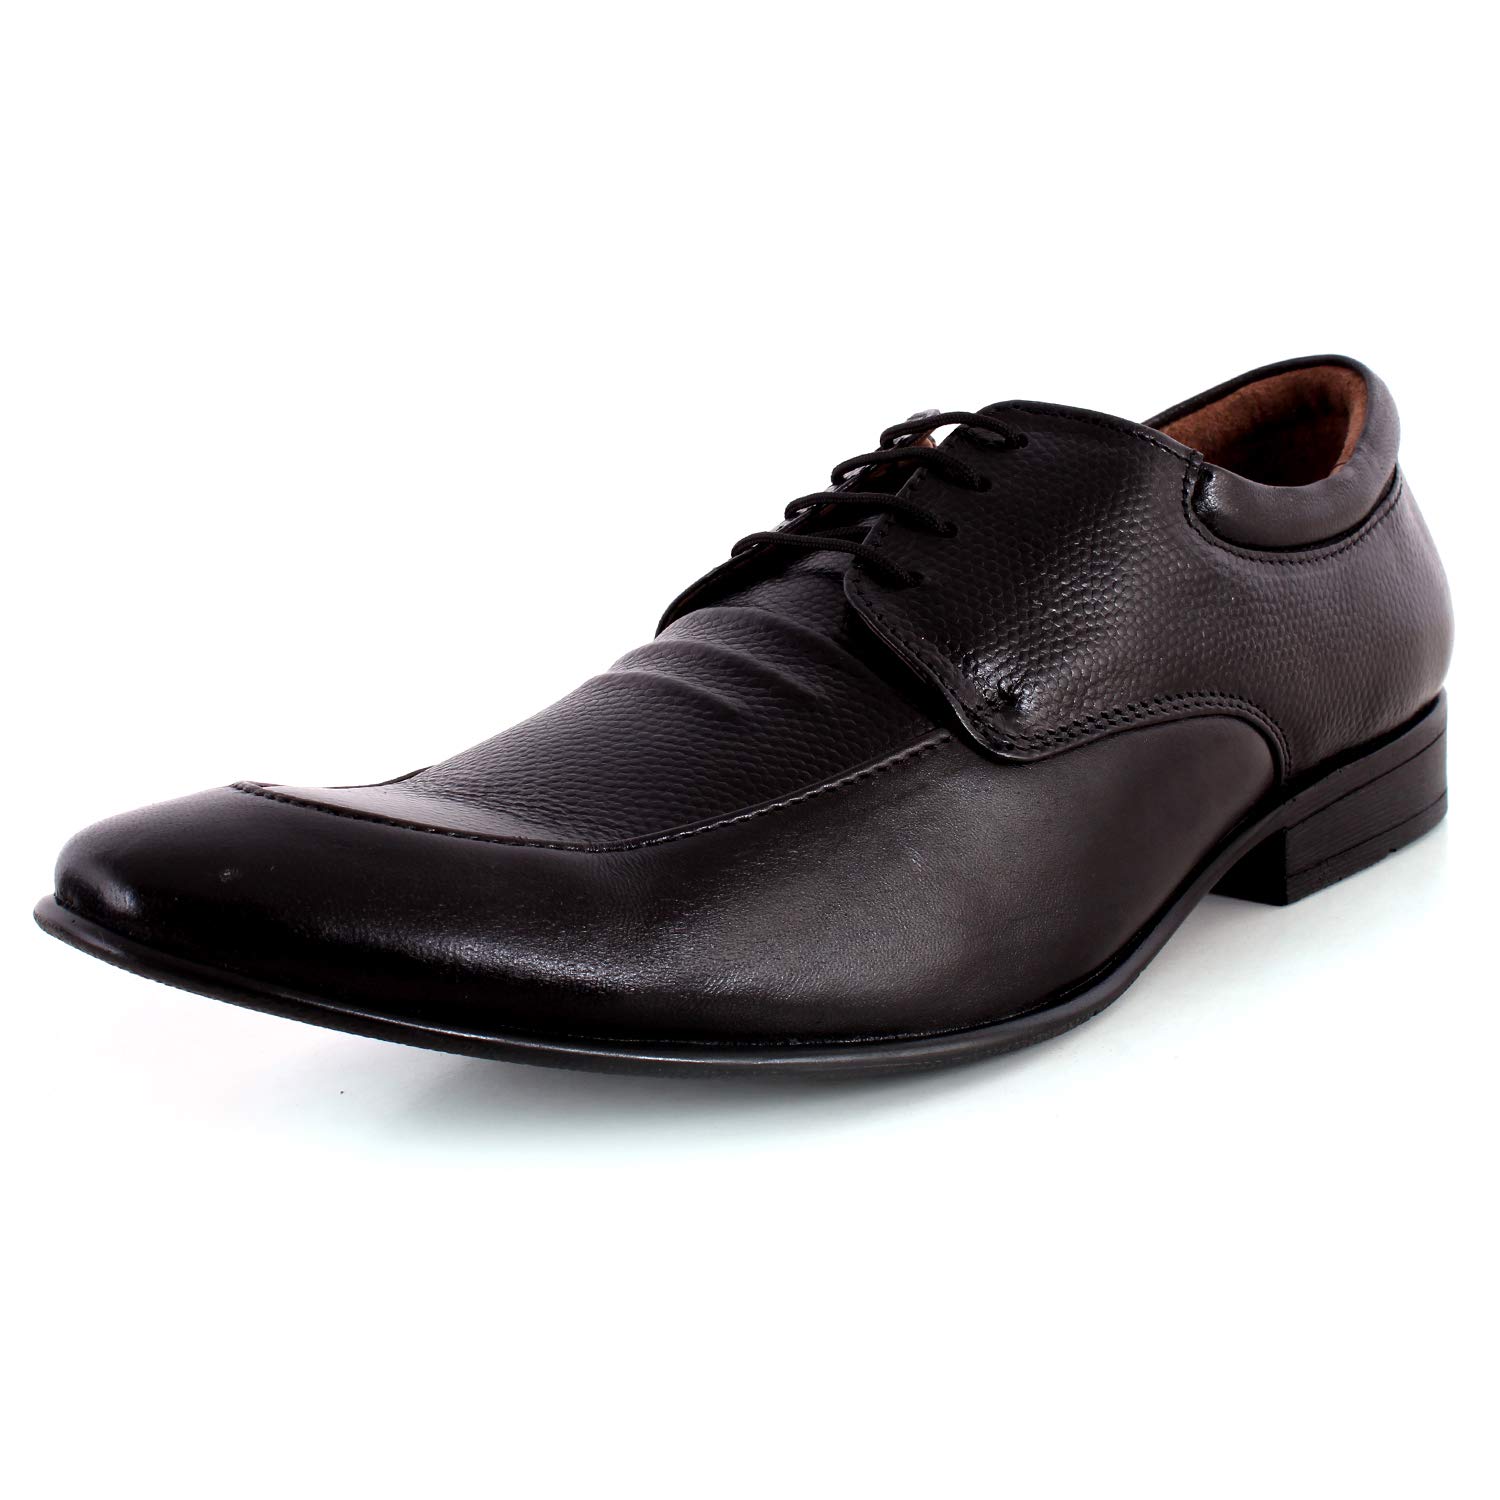 Nu_6_1-min | Online Store for Men Footwear in India